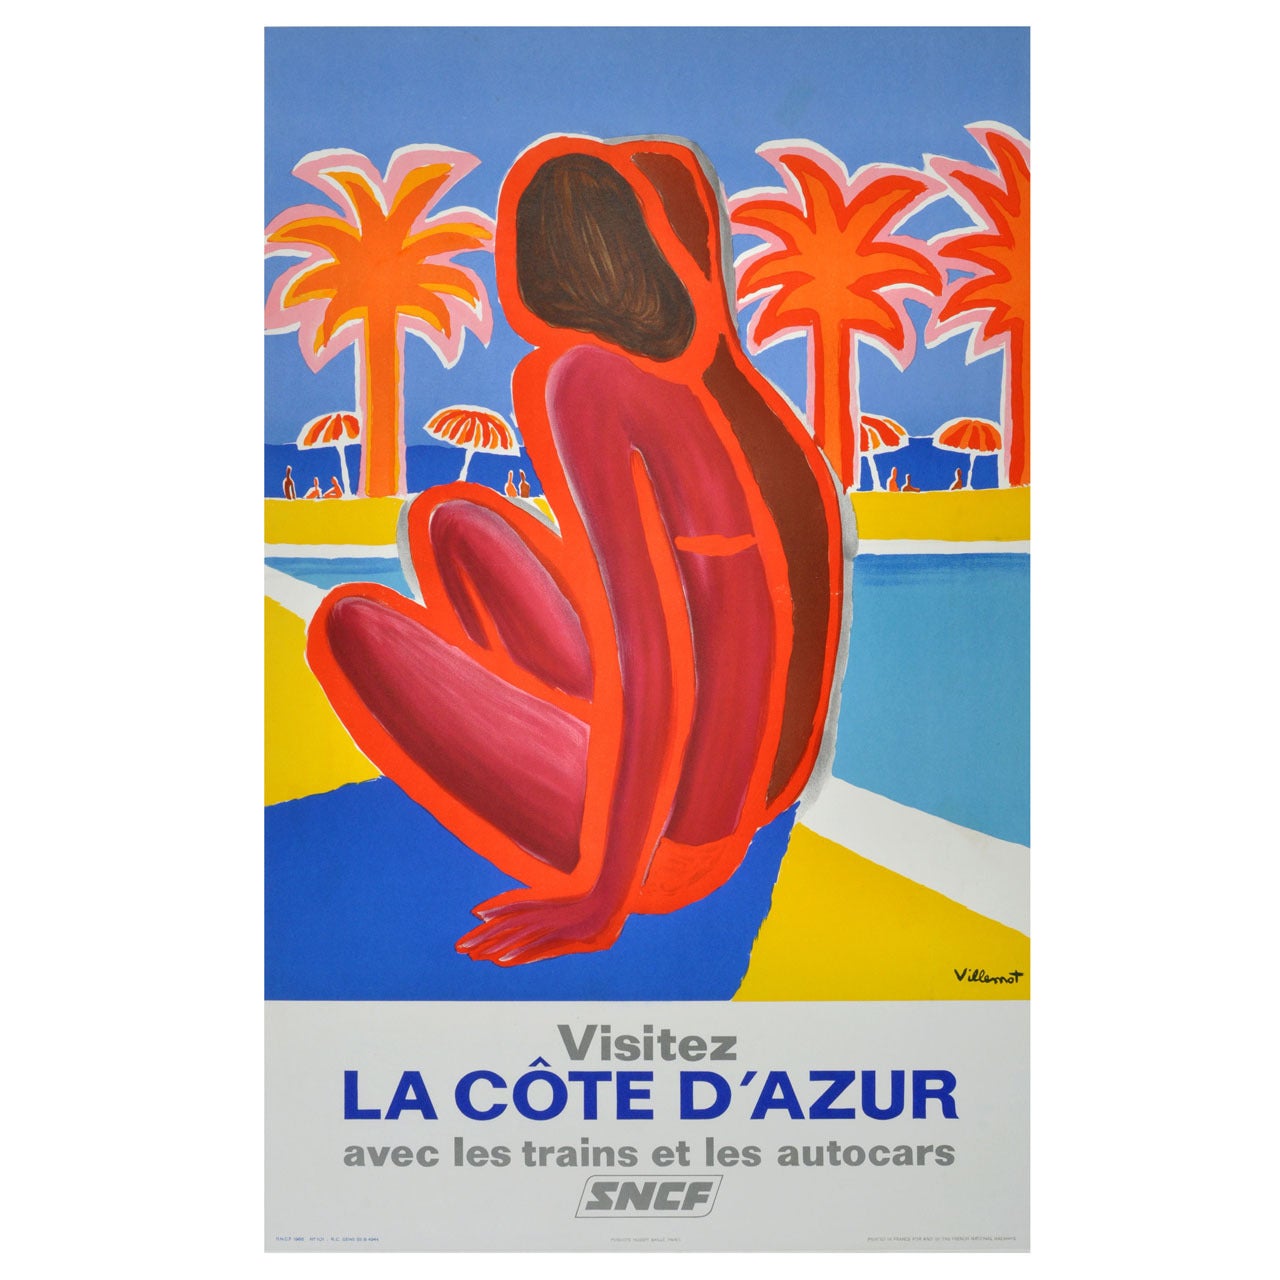 Original Vintage French Railways Poster By Bernard Villemot For The Cote d'Azur